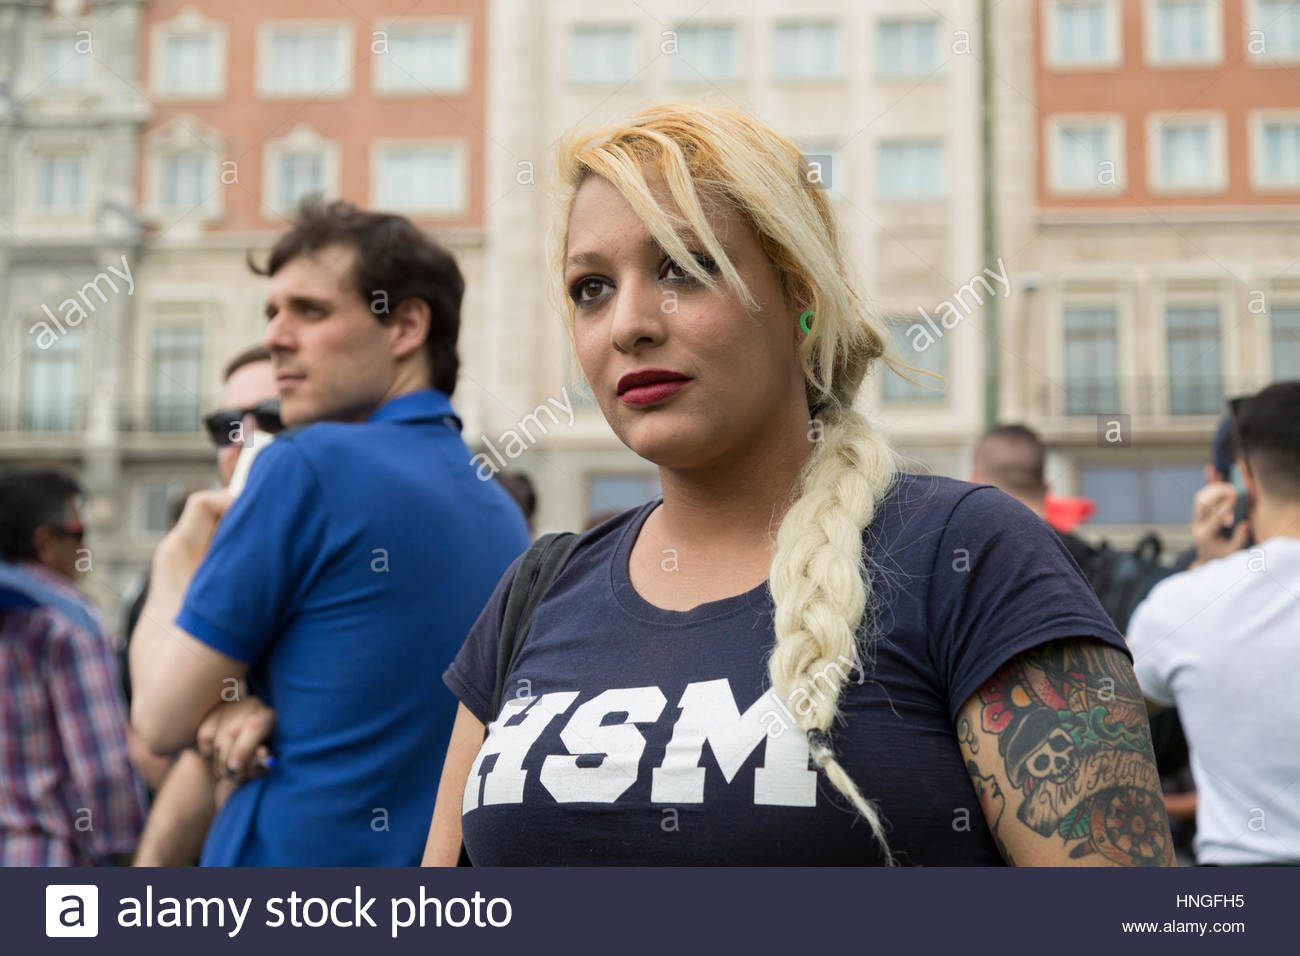 Melisa Leader Of Hogar Social Madrid In The Manifestation Of